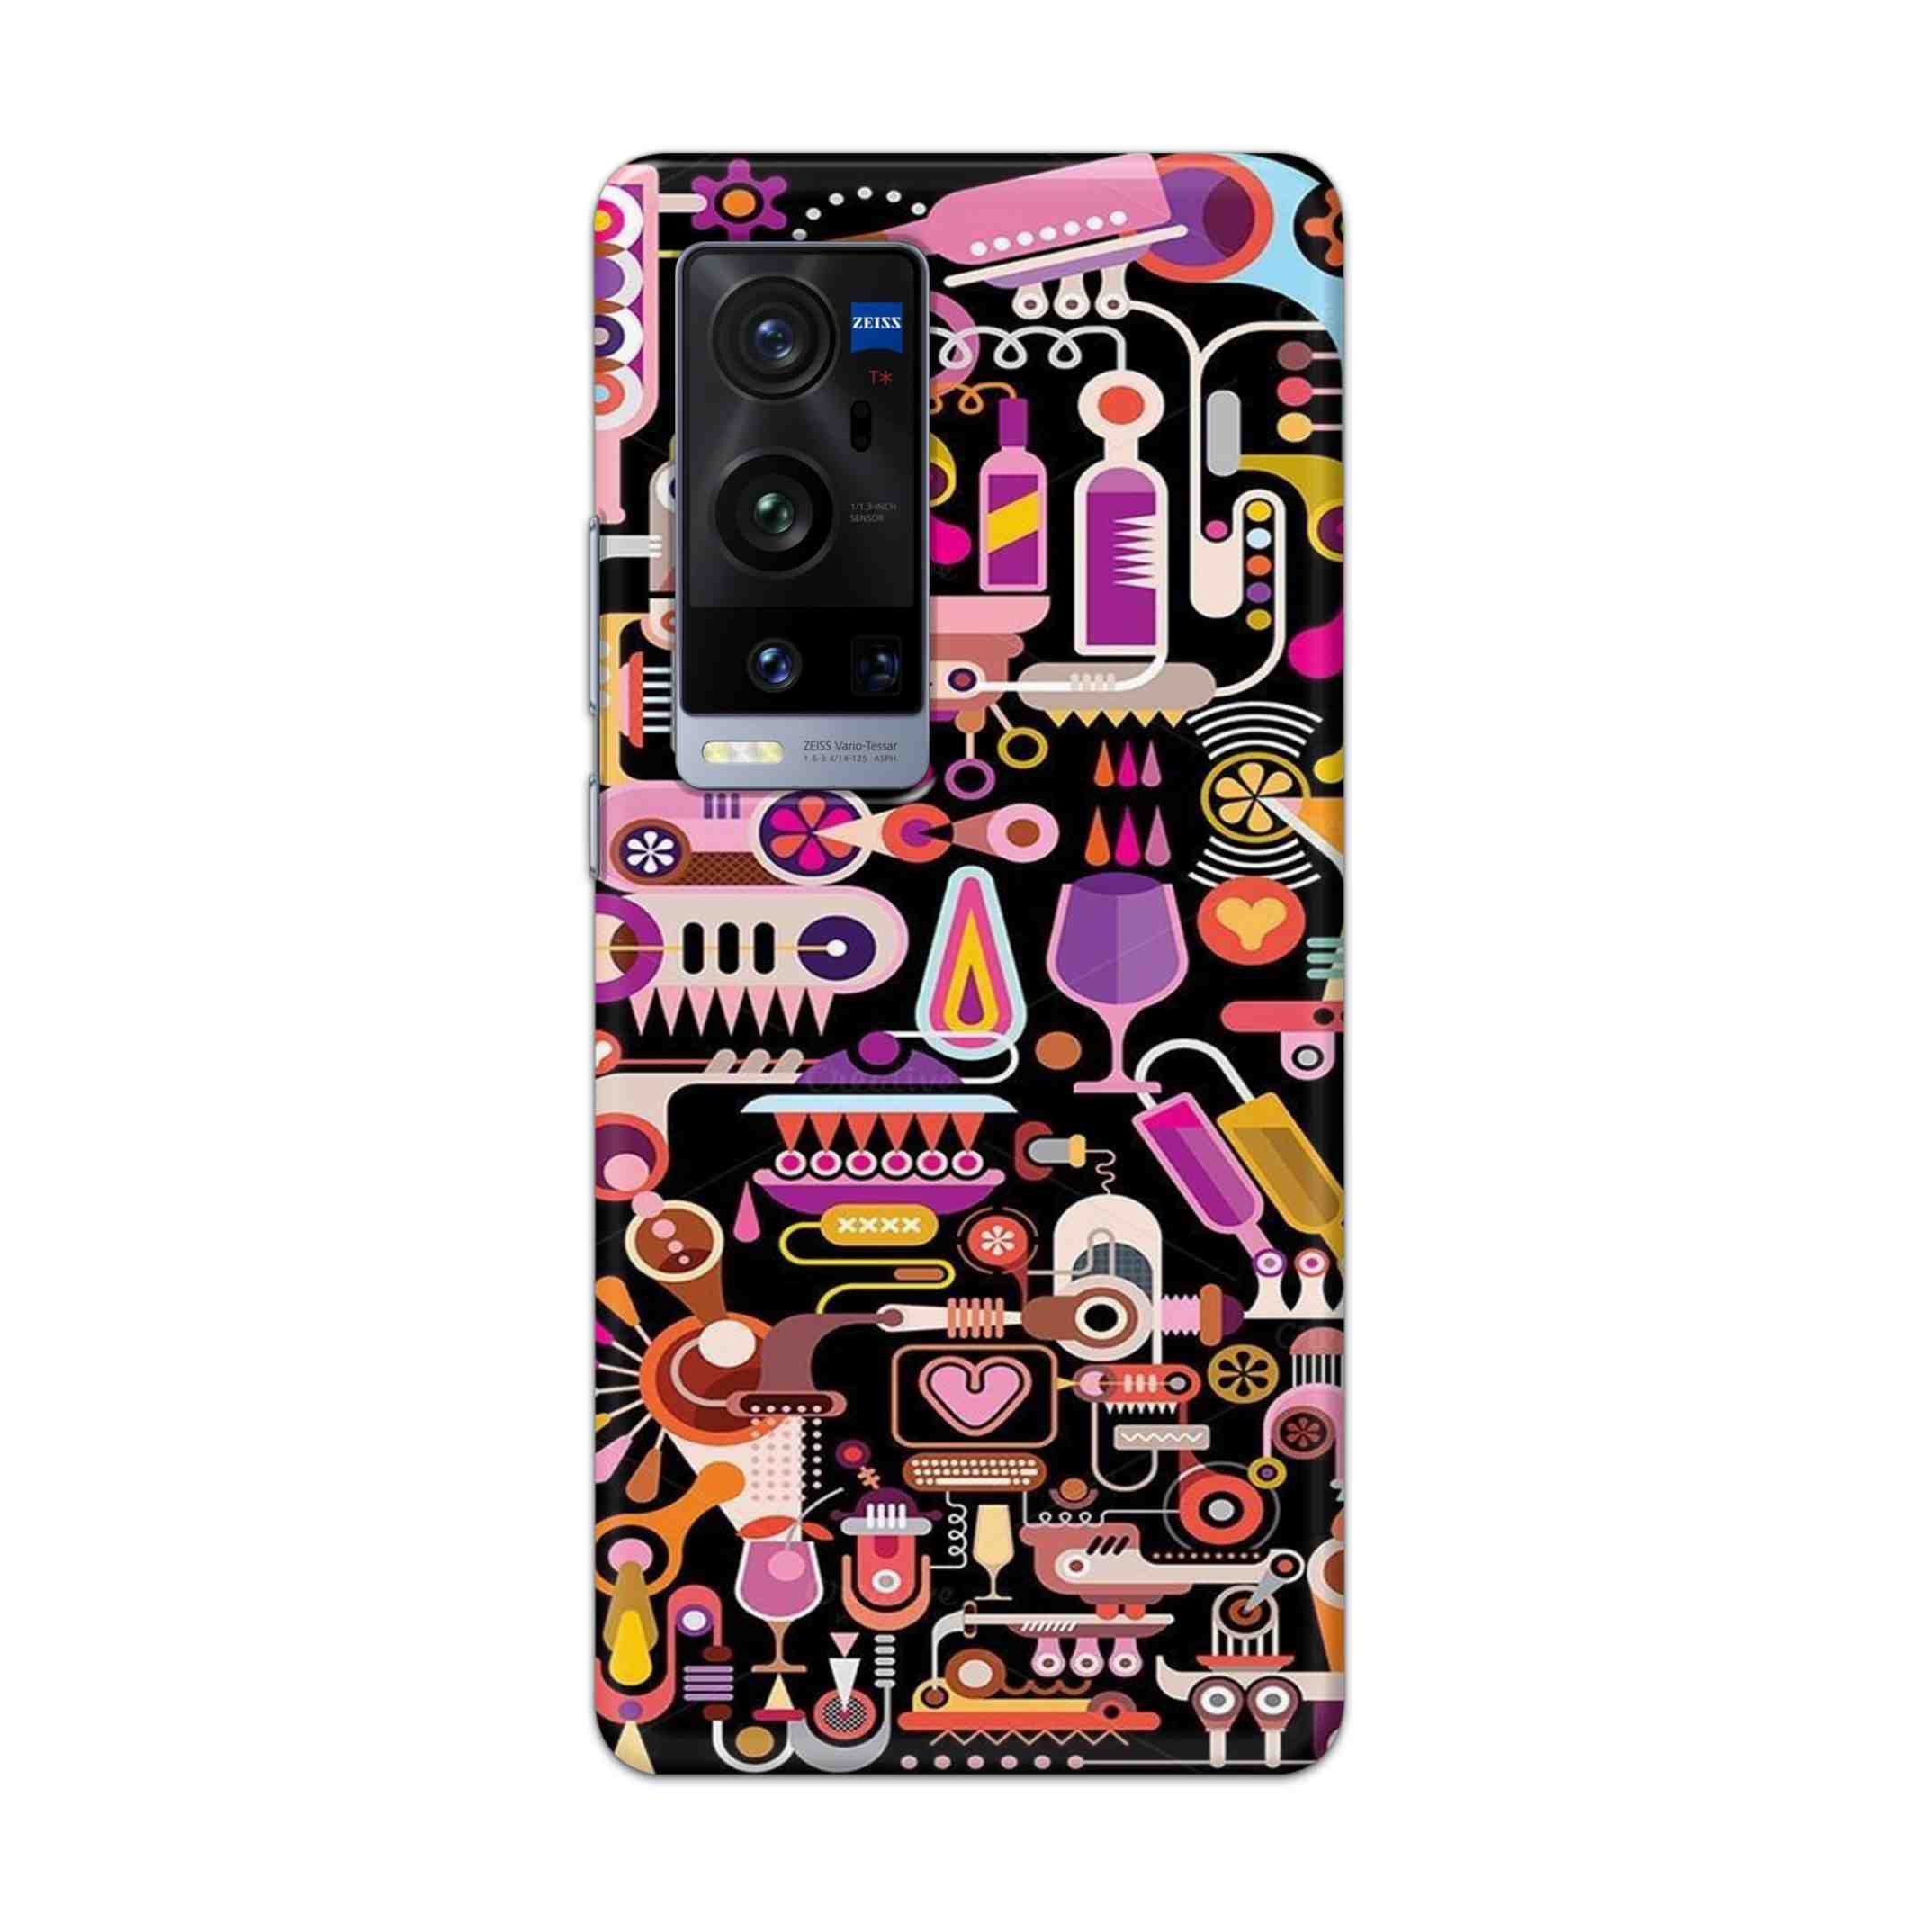 Buy Lab Art Hard Back Mobile Phone Case Cover For Vivo X60 Pro Plus Online